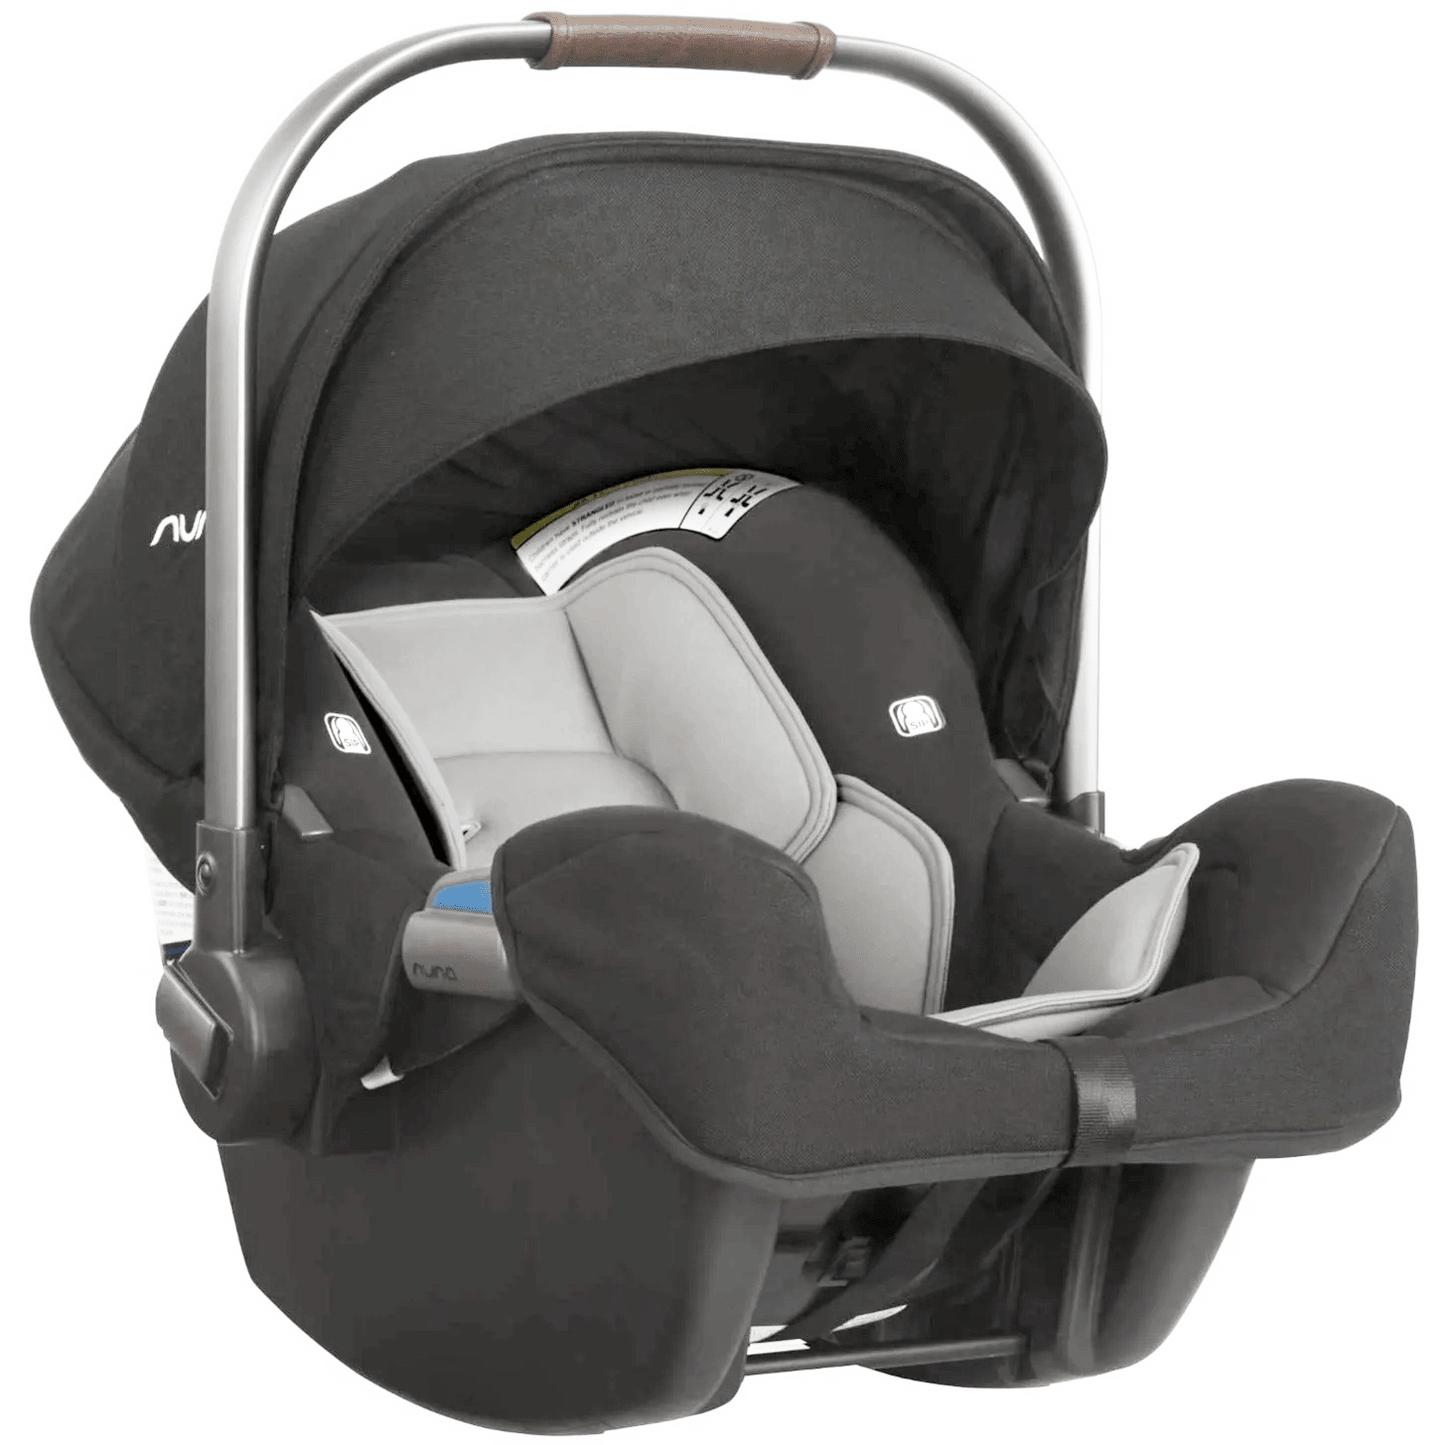 Nuna Pipa RX Infant Car Seat + RELX Base